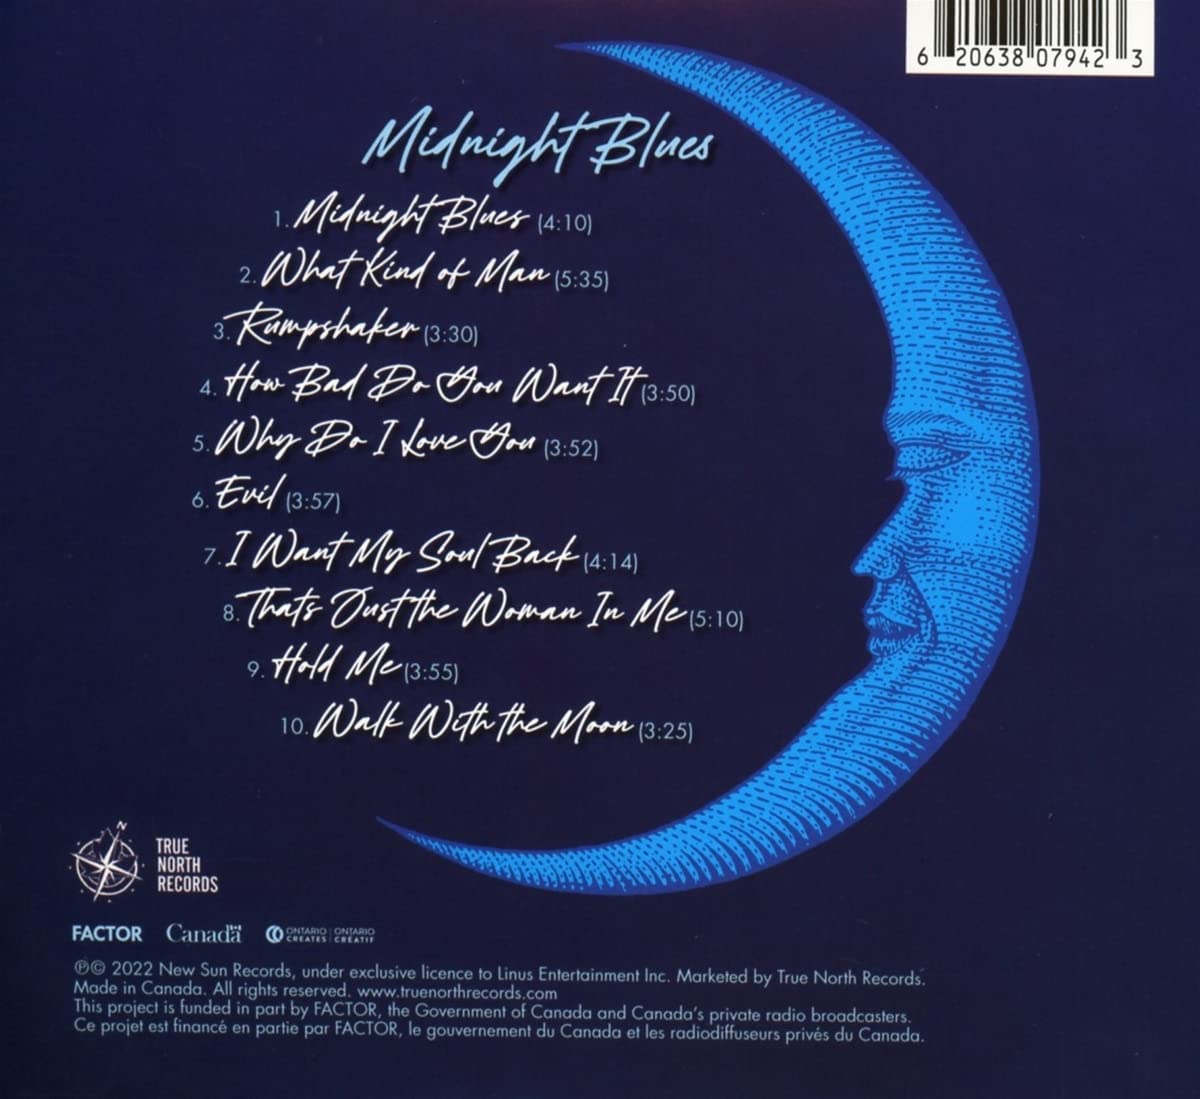 Crystal Shawanda - Midnight Blues - CD